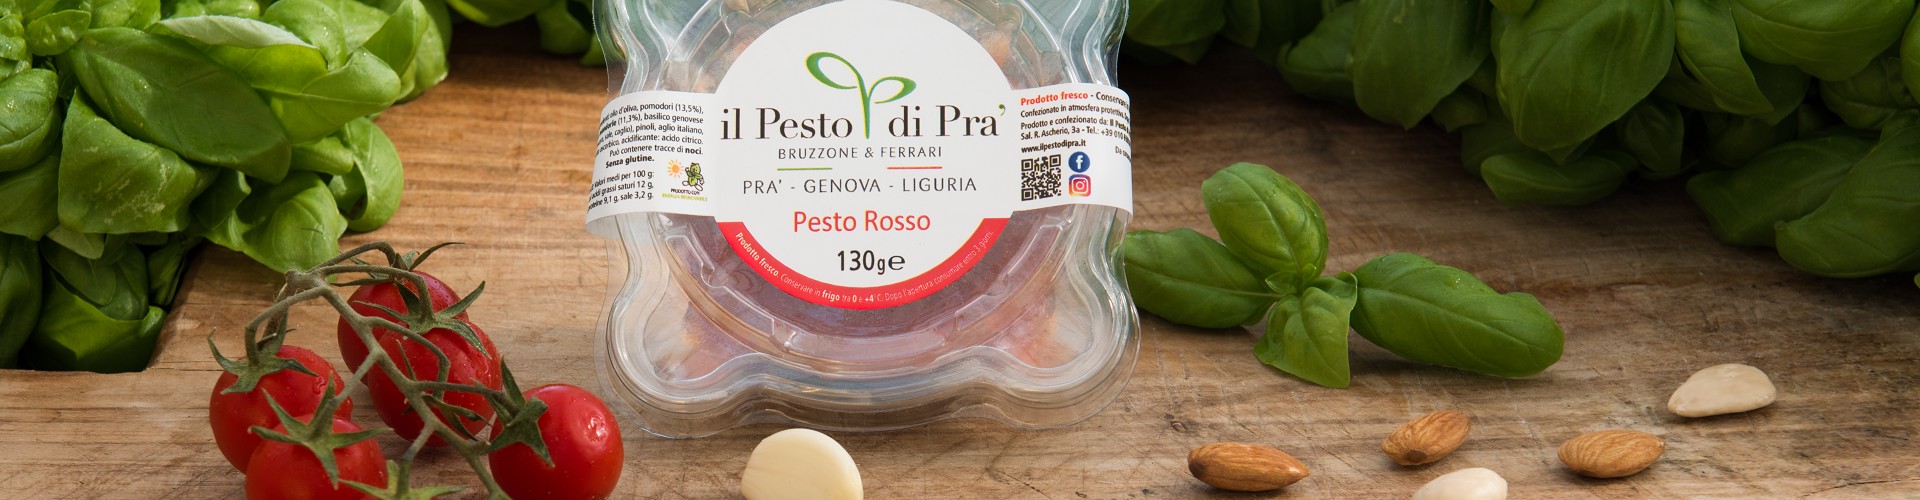 Pesto Tradizionale Genovese Fresco | Pesto Genovese Online | Salsa di Noci Genovese | Pesto Rosso